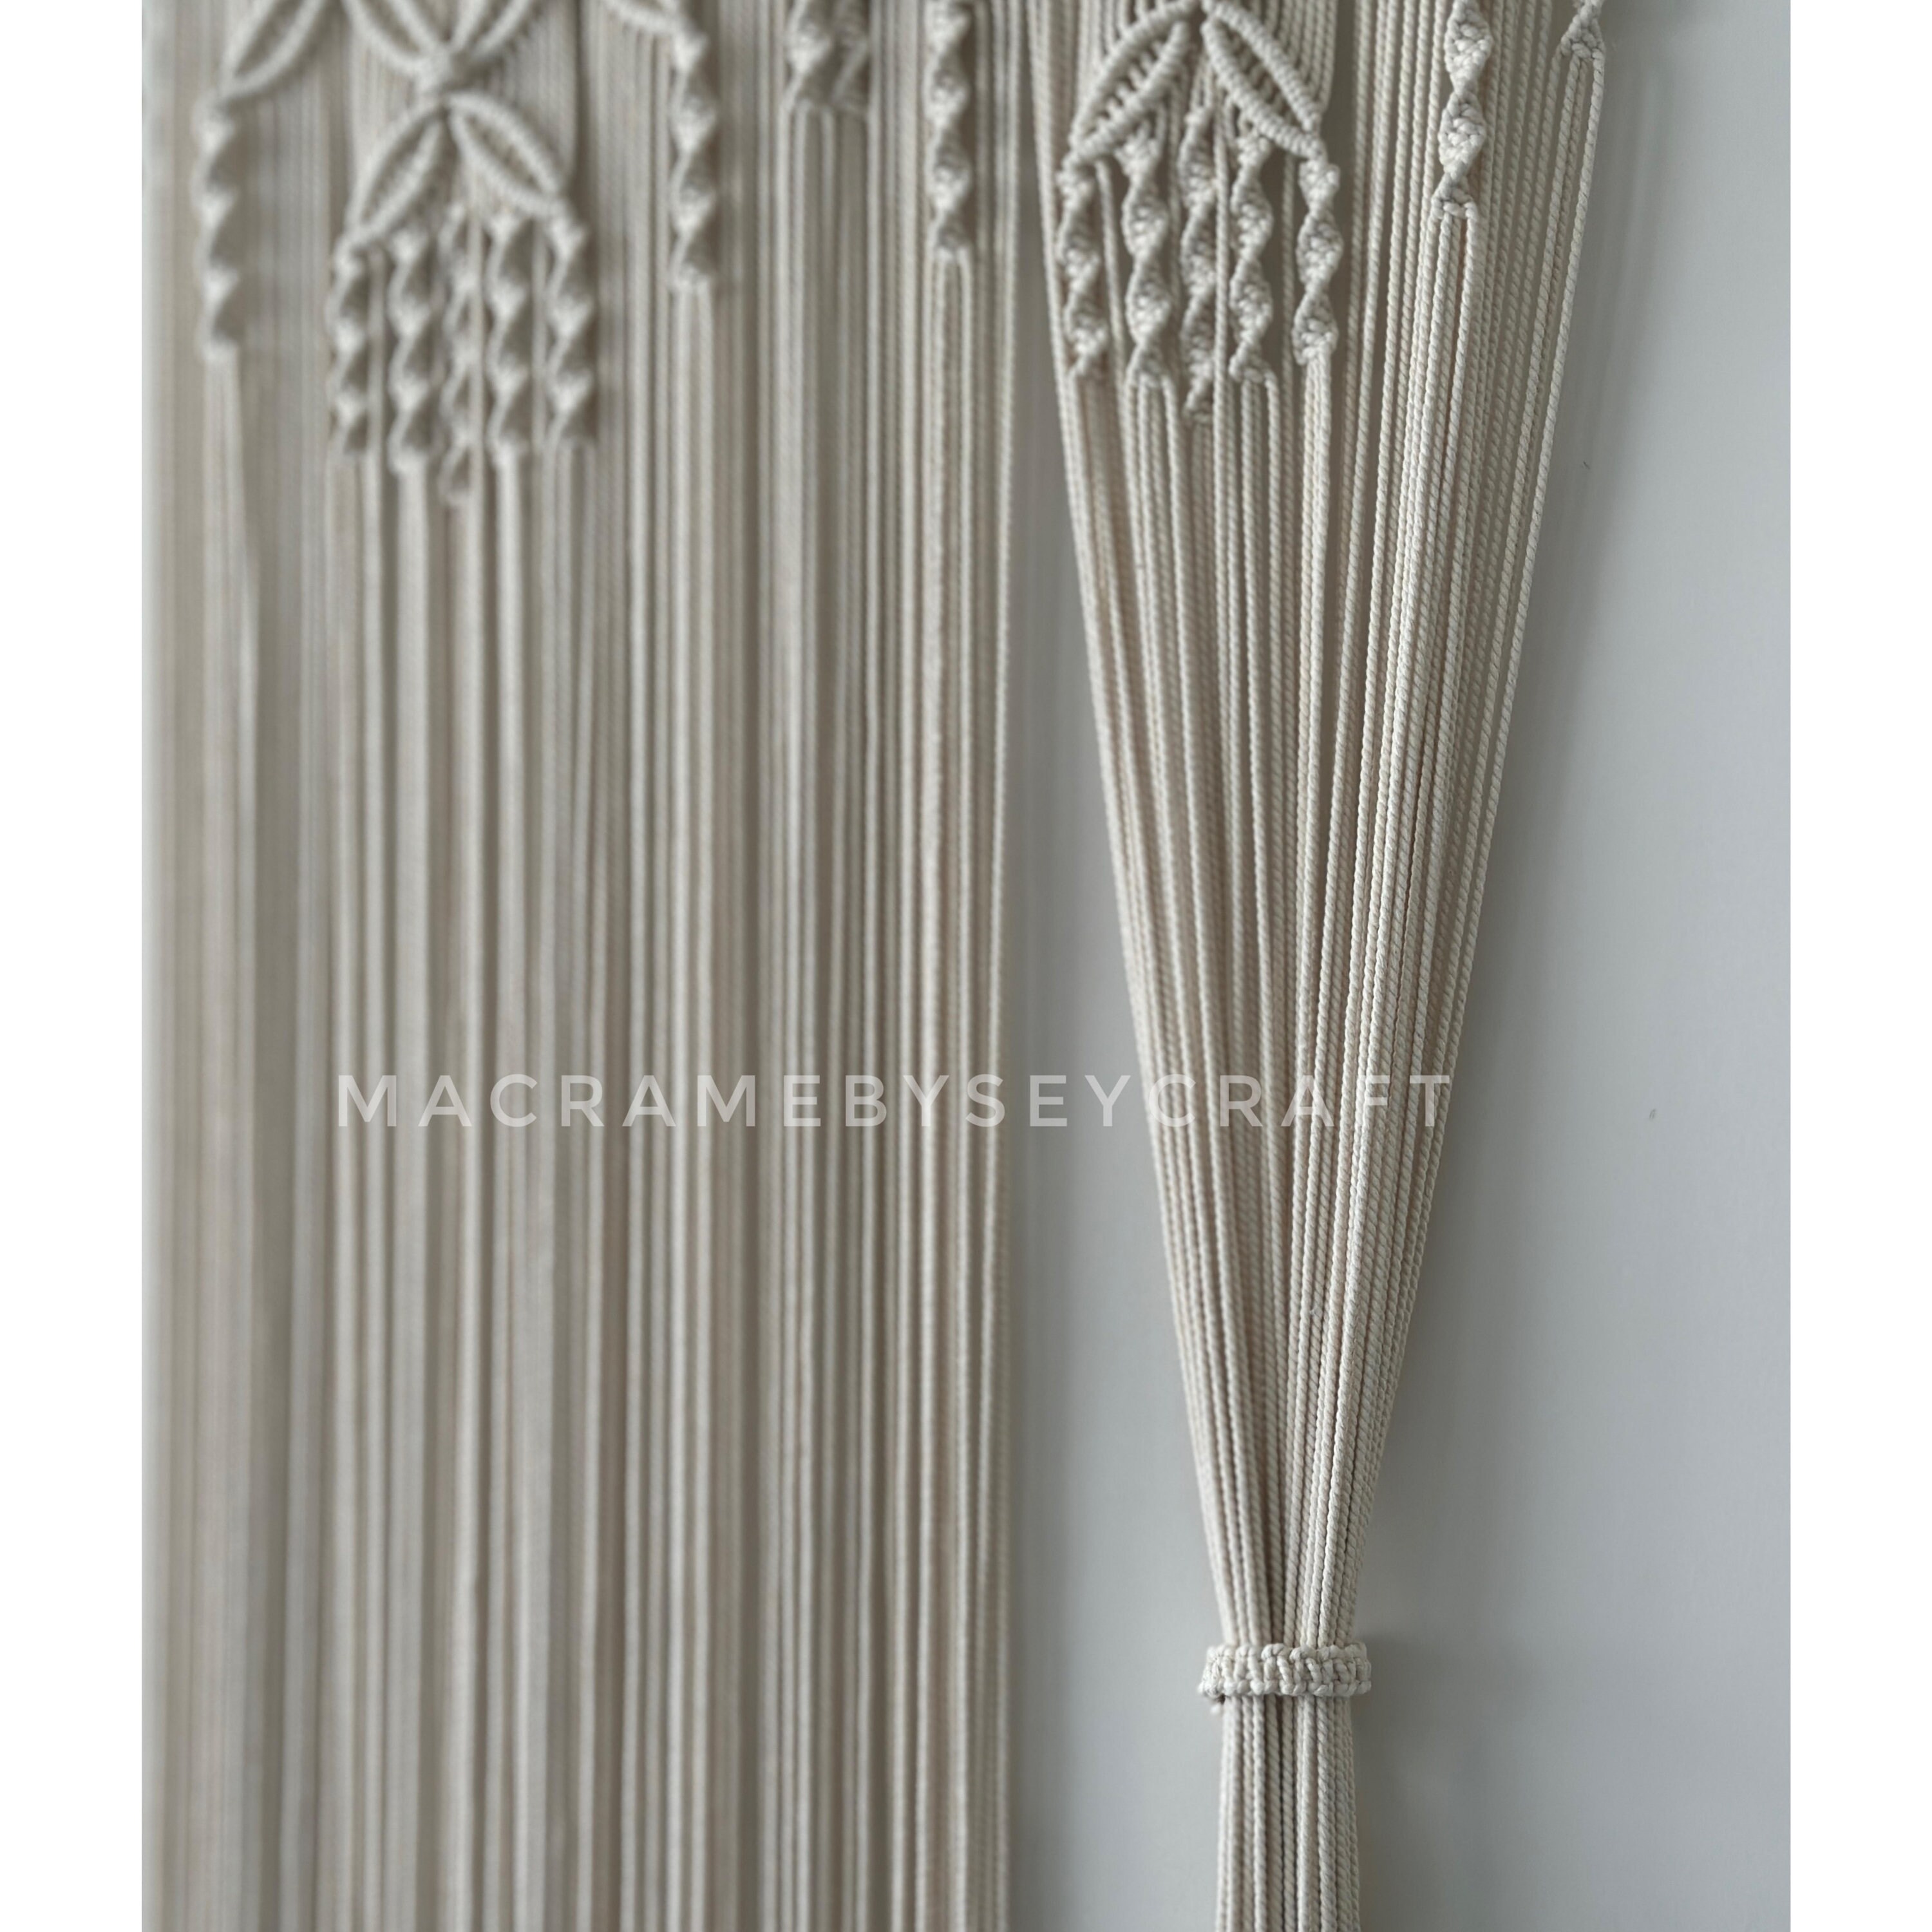 SNUGLIFE Cortina de ducha macramé, cortina de ducha bohemia blanca con  flecos decorativos de algodón para decoración moderna de baño de granja,  tela